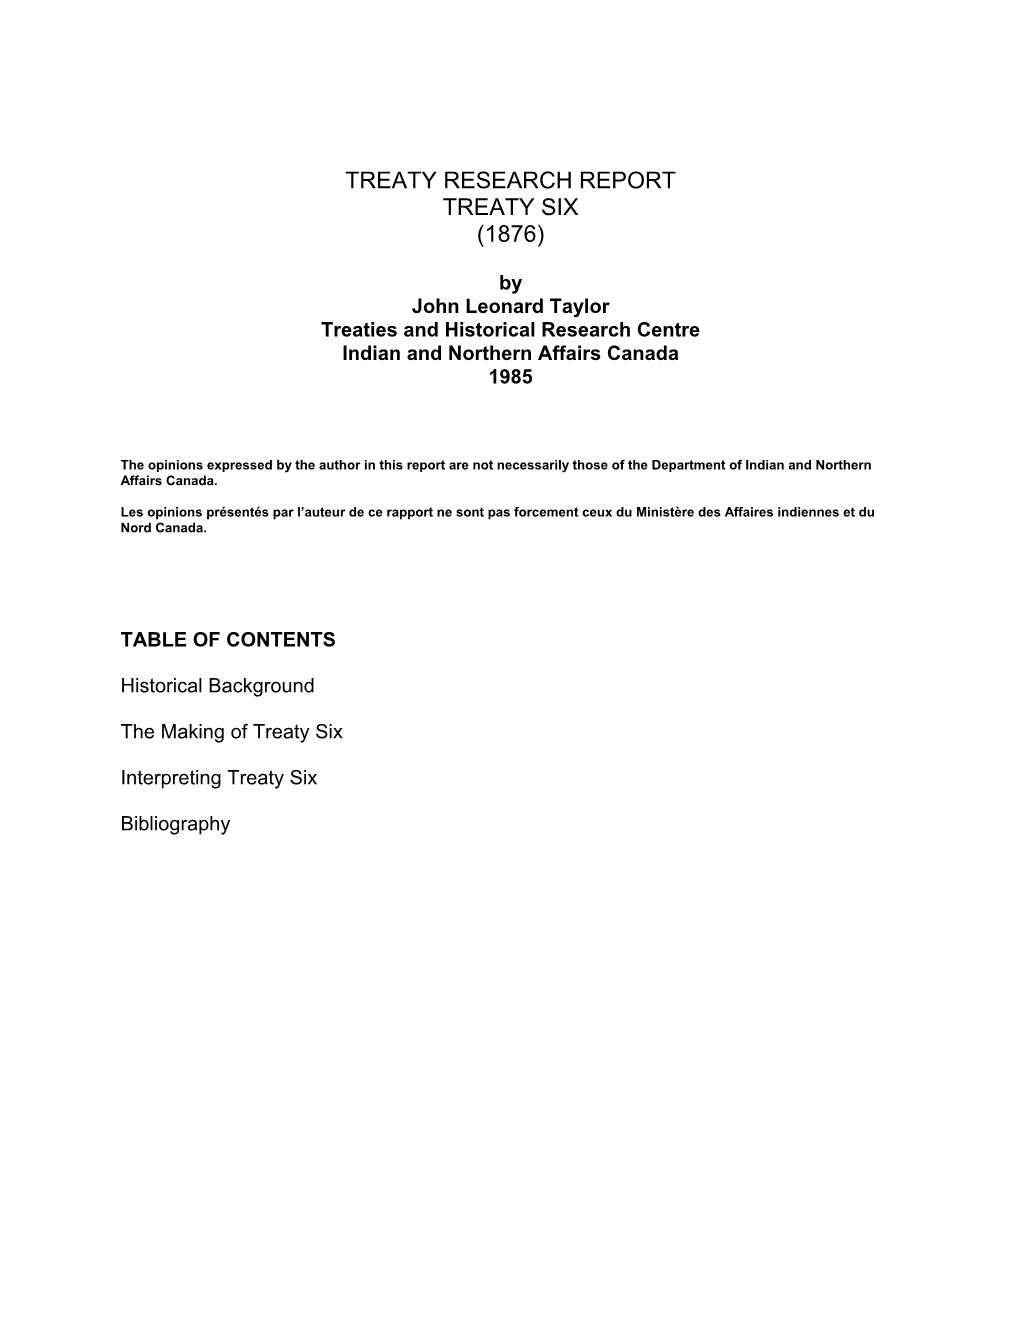 Treaty Research Report Treaty Six (1876)